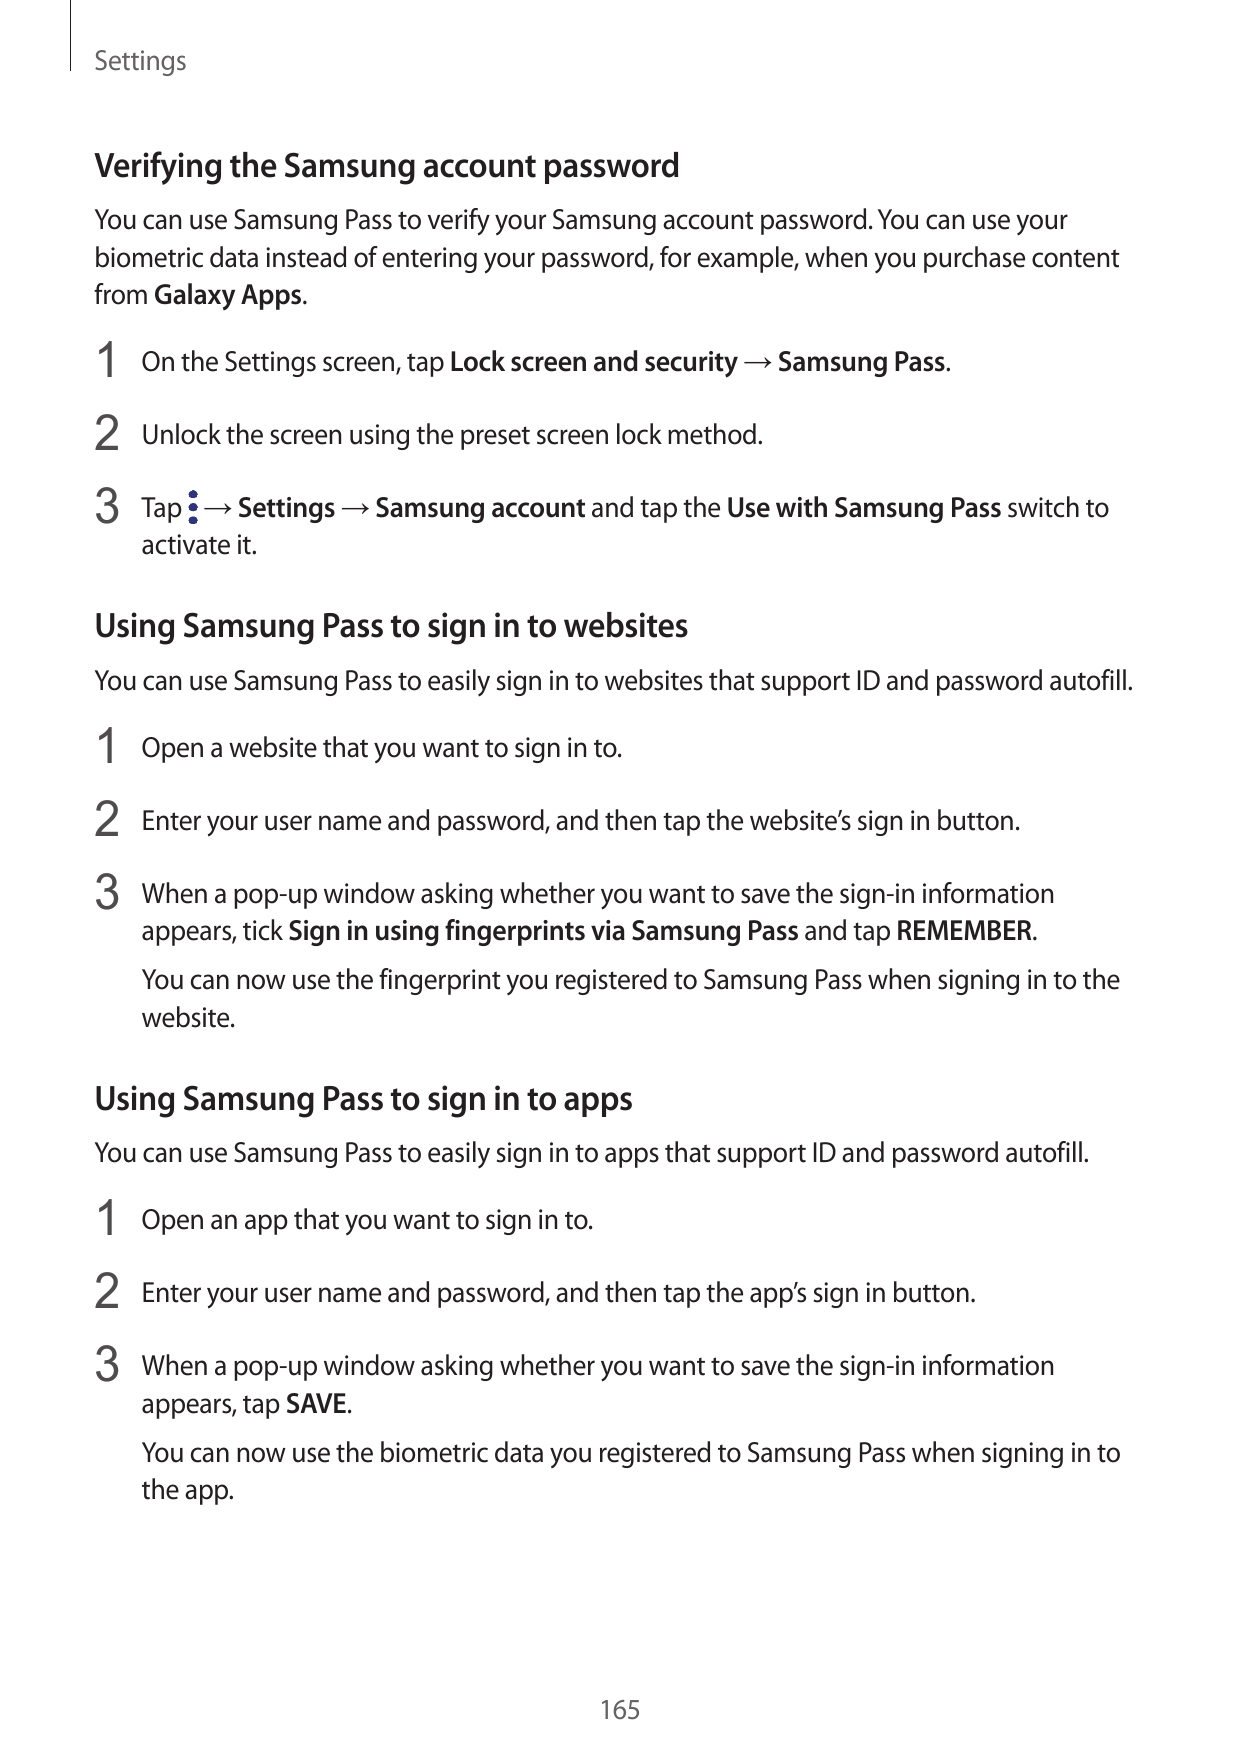 SettingsVerifying the Samsung account passwordYou can use Samsung Pass to verify your Samsung account password. You can use your